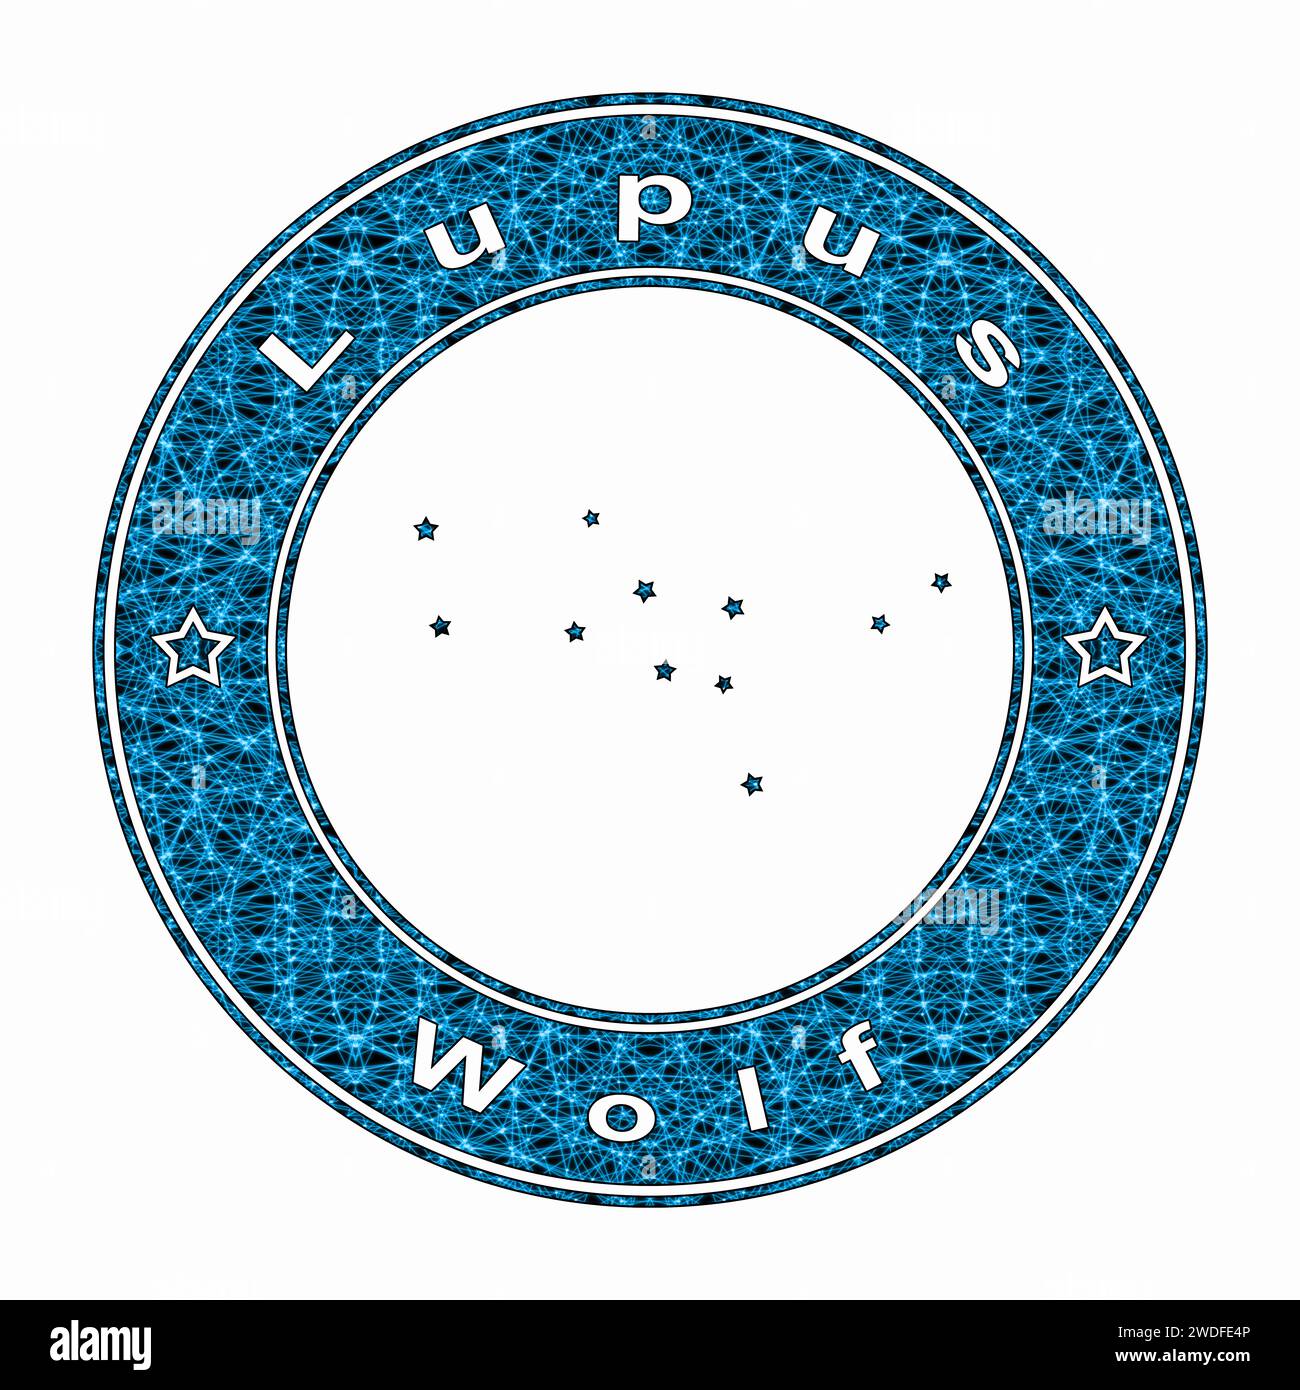 Lepus Star Constellation, Cluster of Stars, Hare Constellation Stock Photo